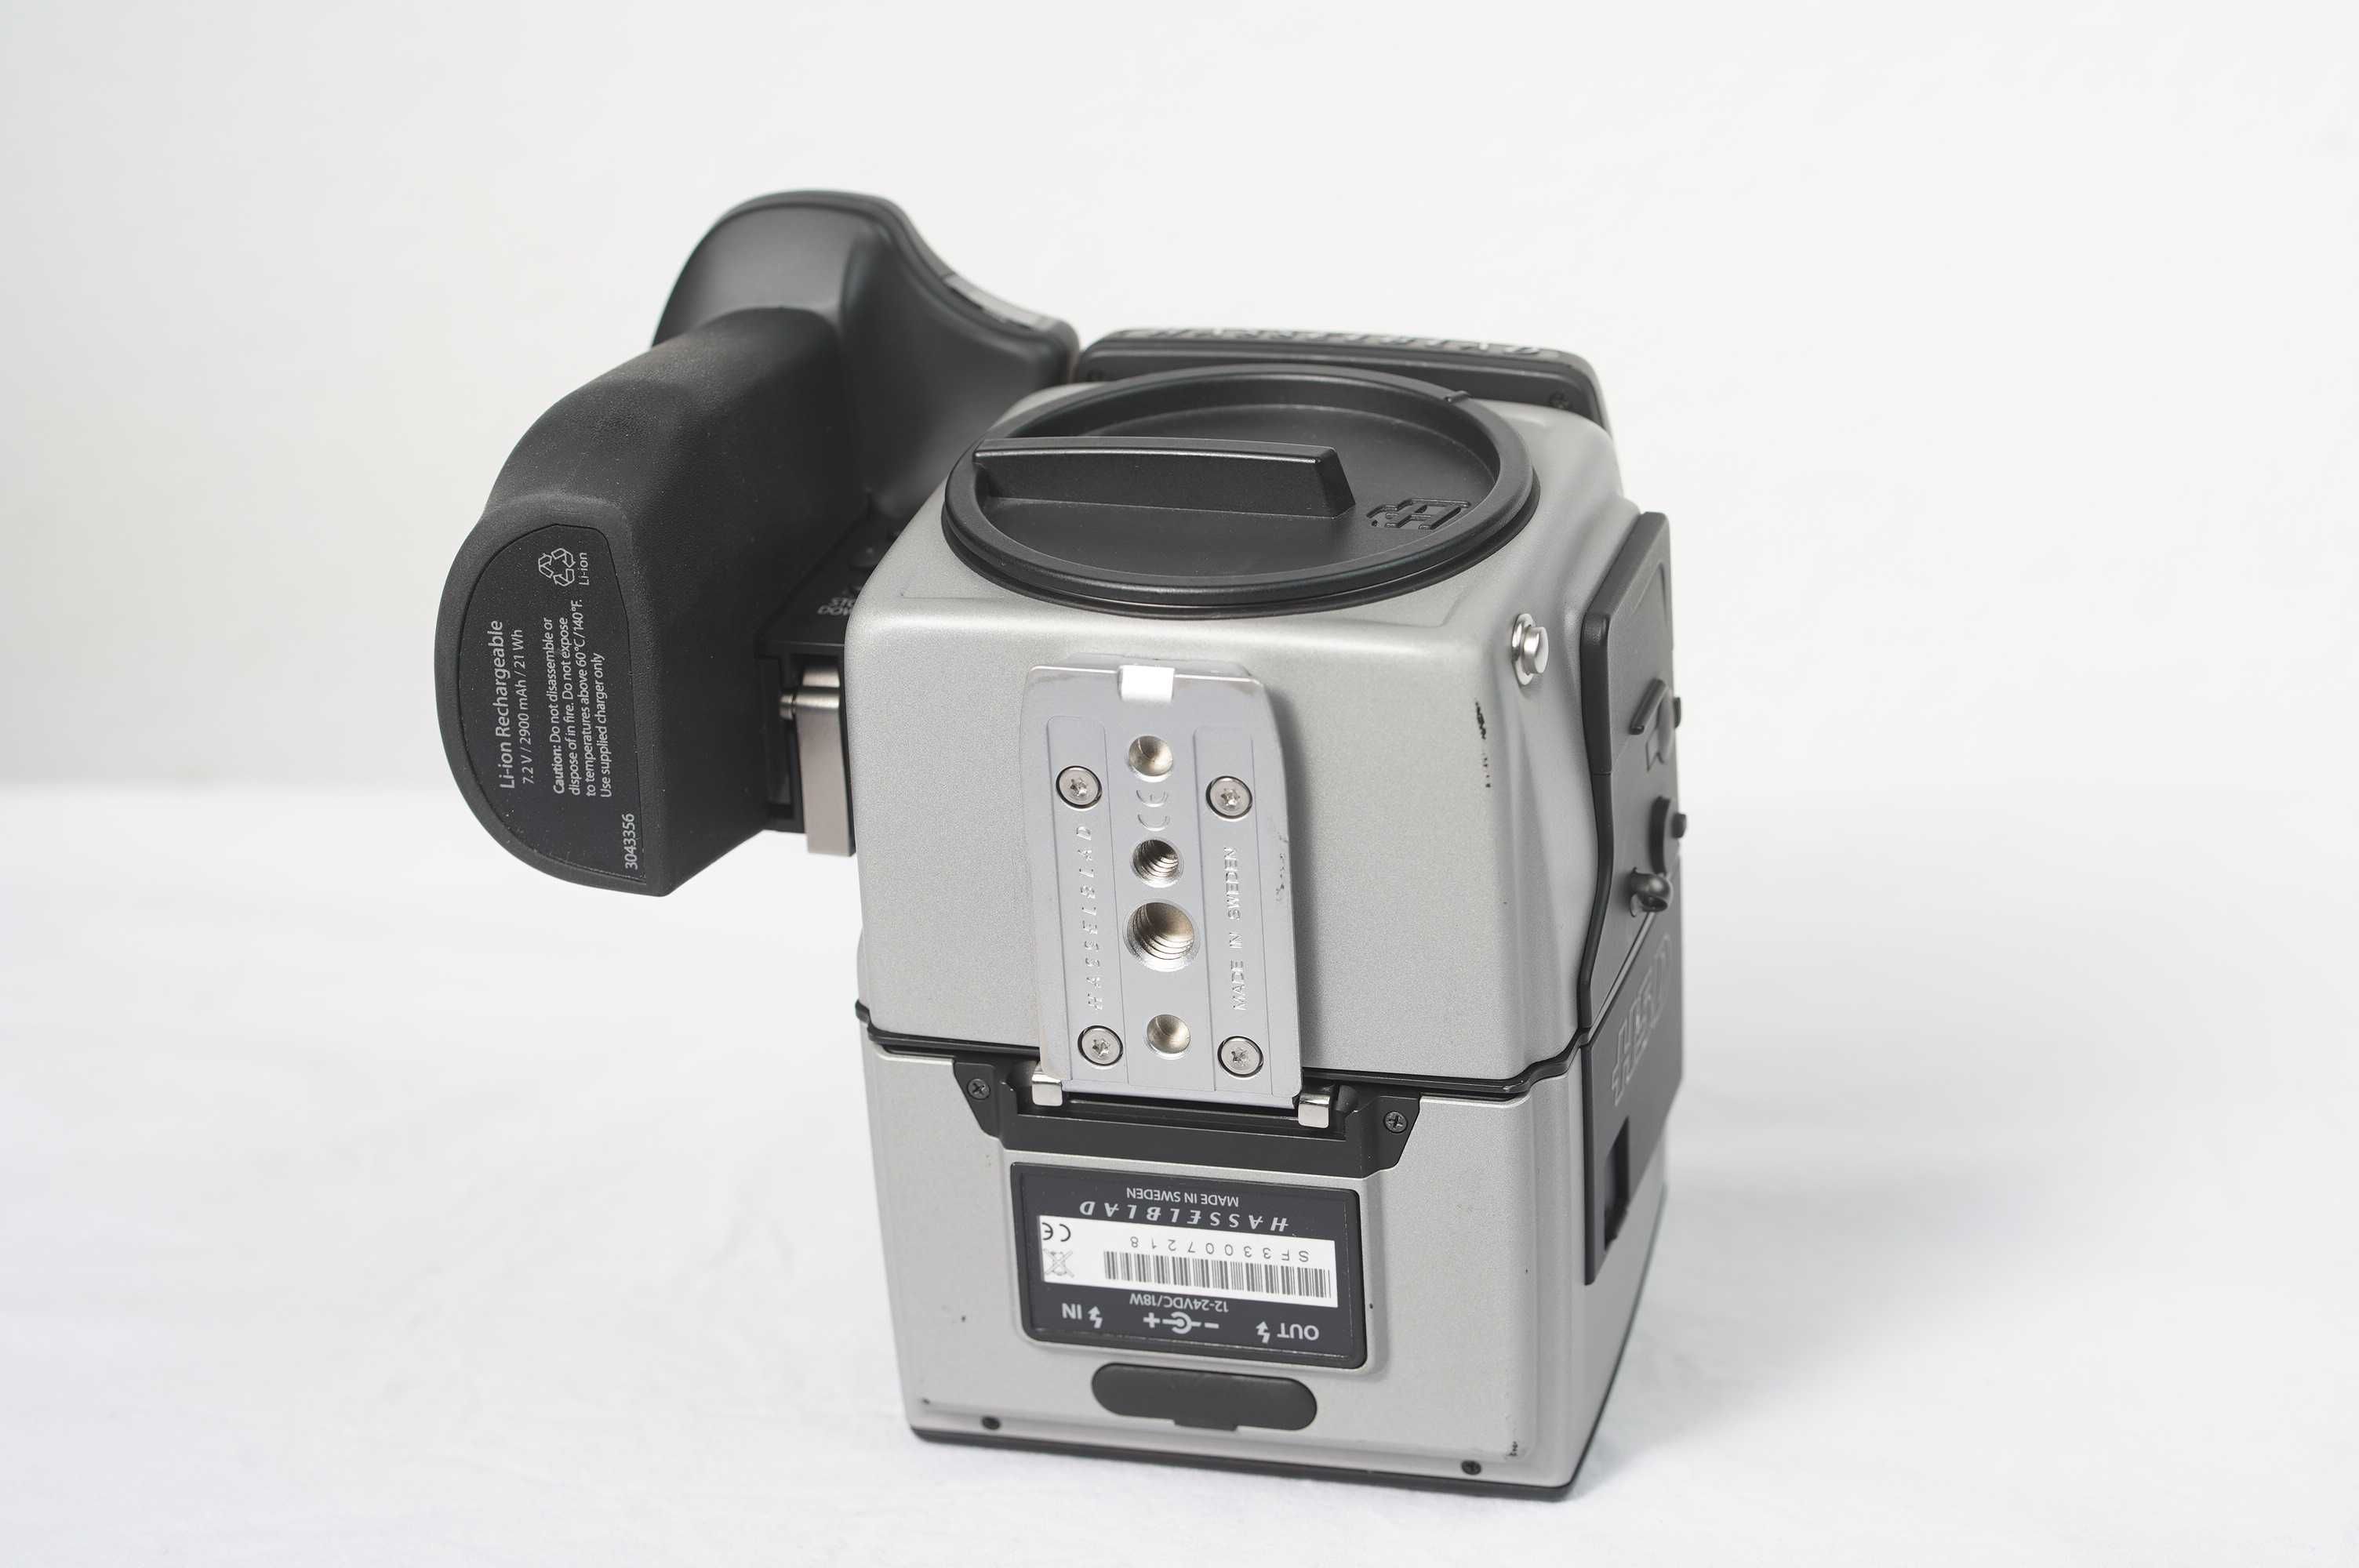 Hasselblad H5D-60 CCD cyfrowy średni format 6x4.5